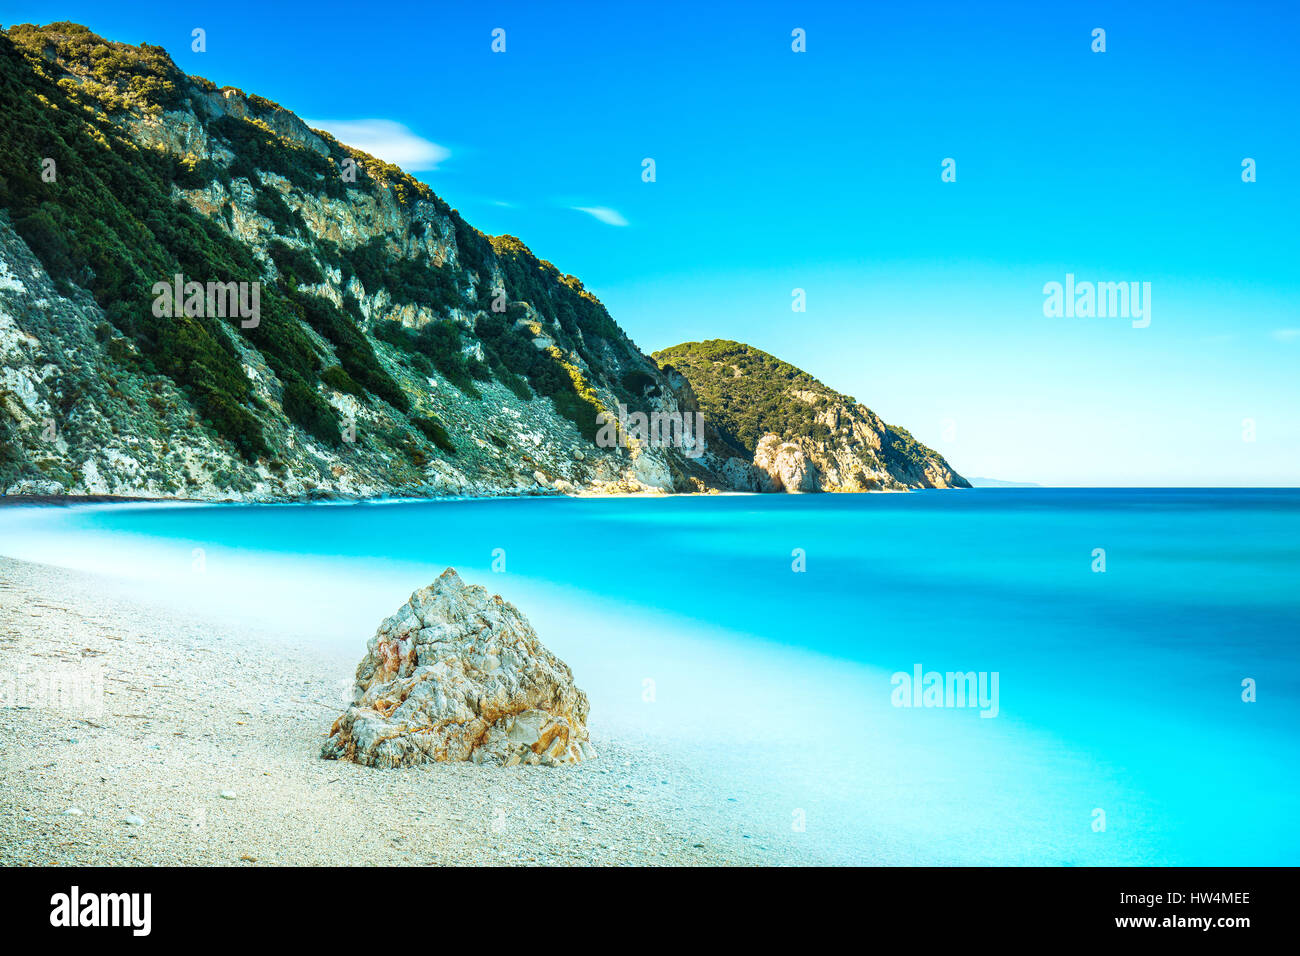 Rock im blauen Meer. Sansone Strand. Die Insel Elba. Toskana, Italien. Langzeitbelichtung Fotografie Stockfoto